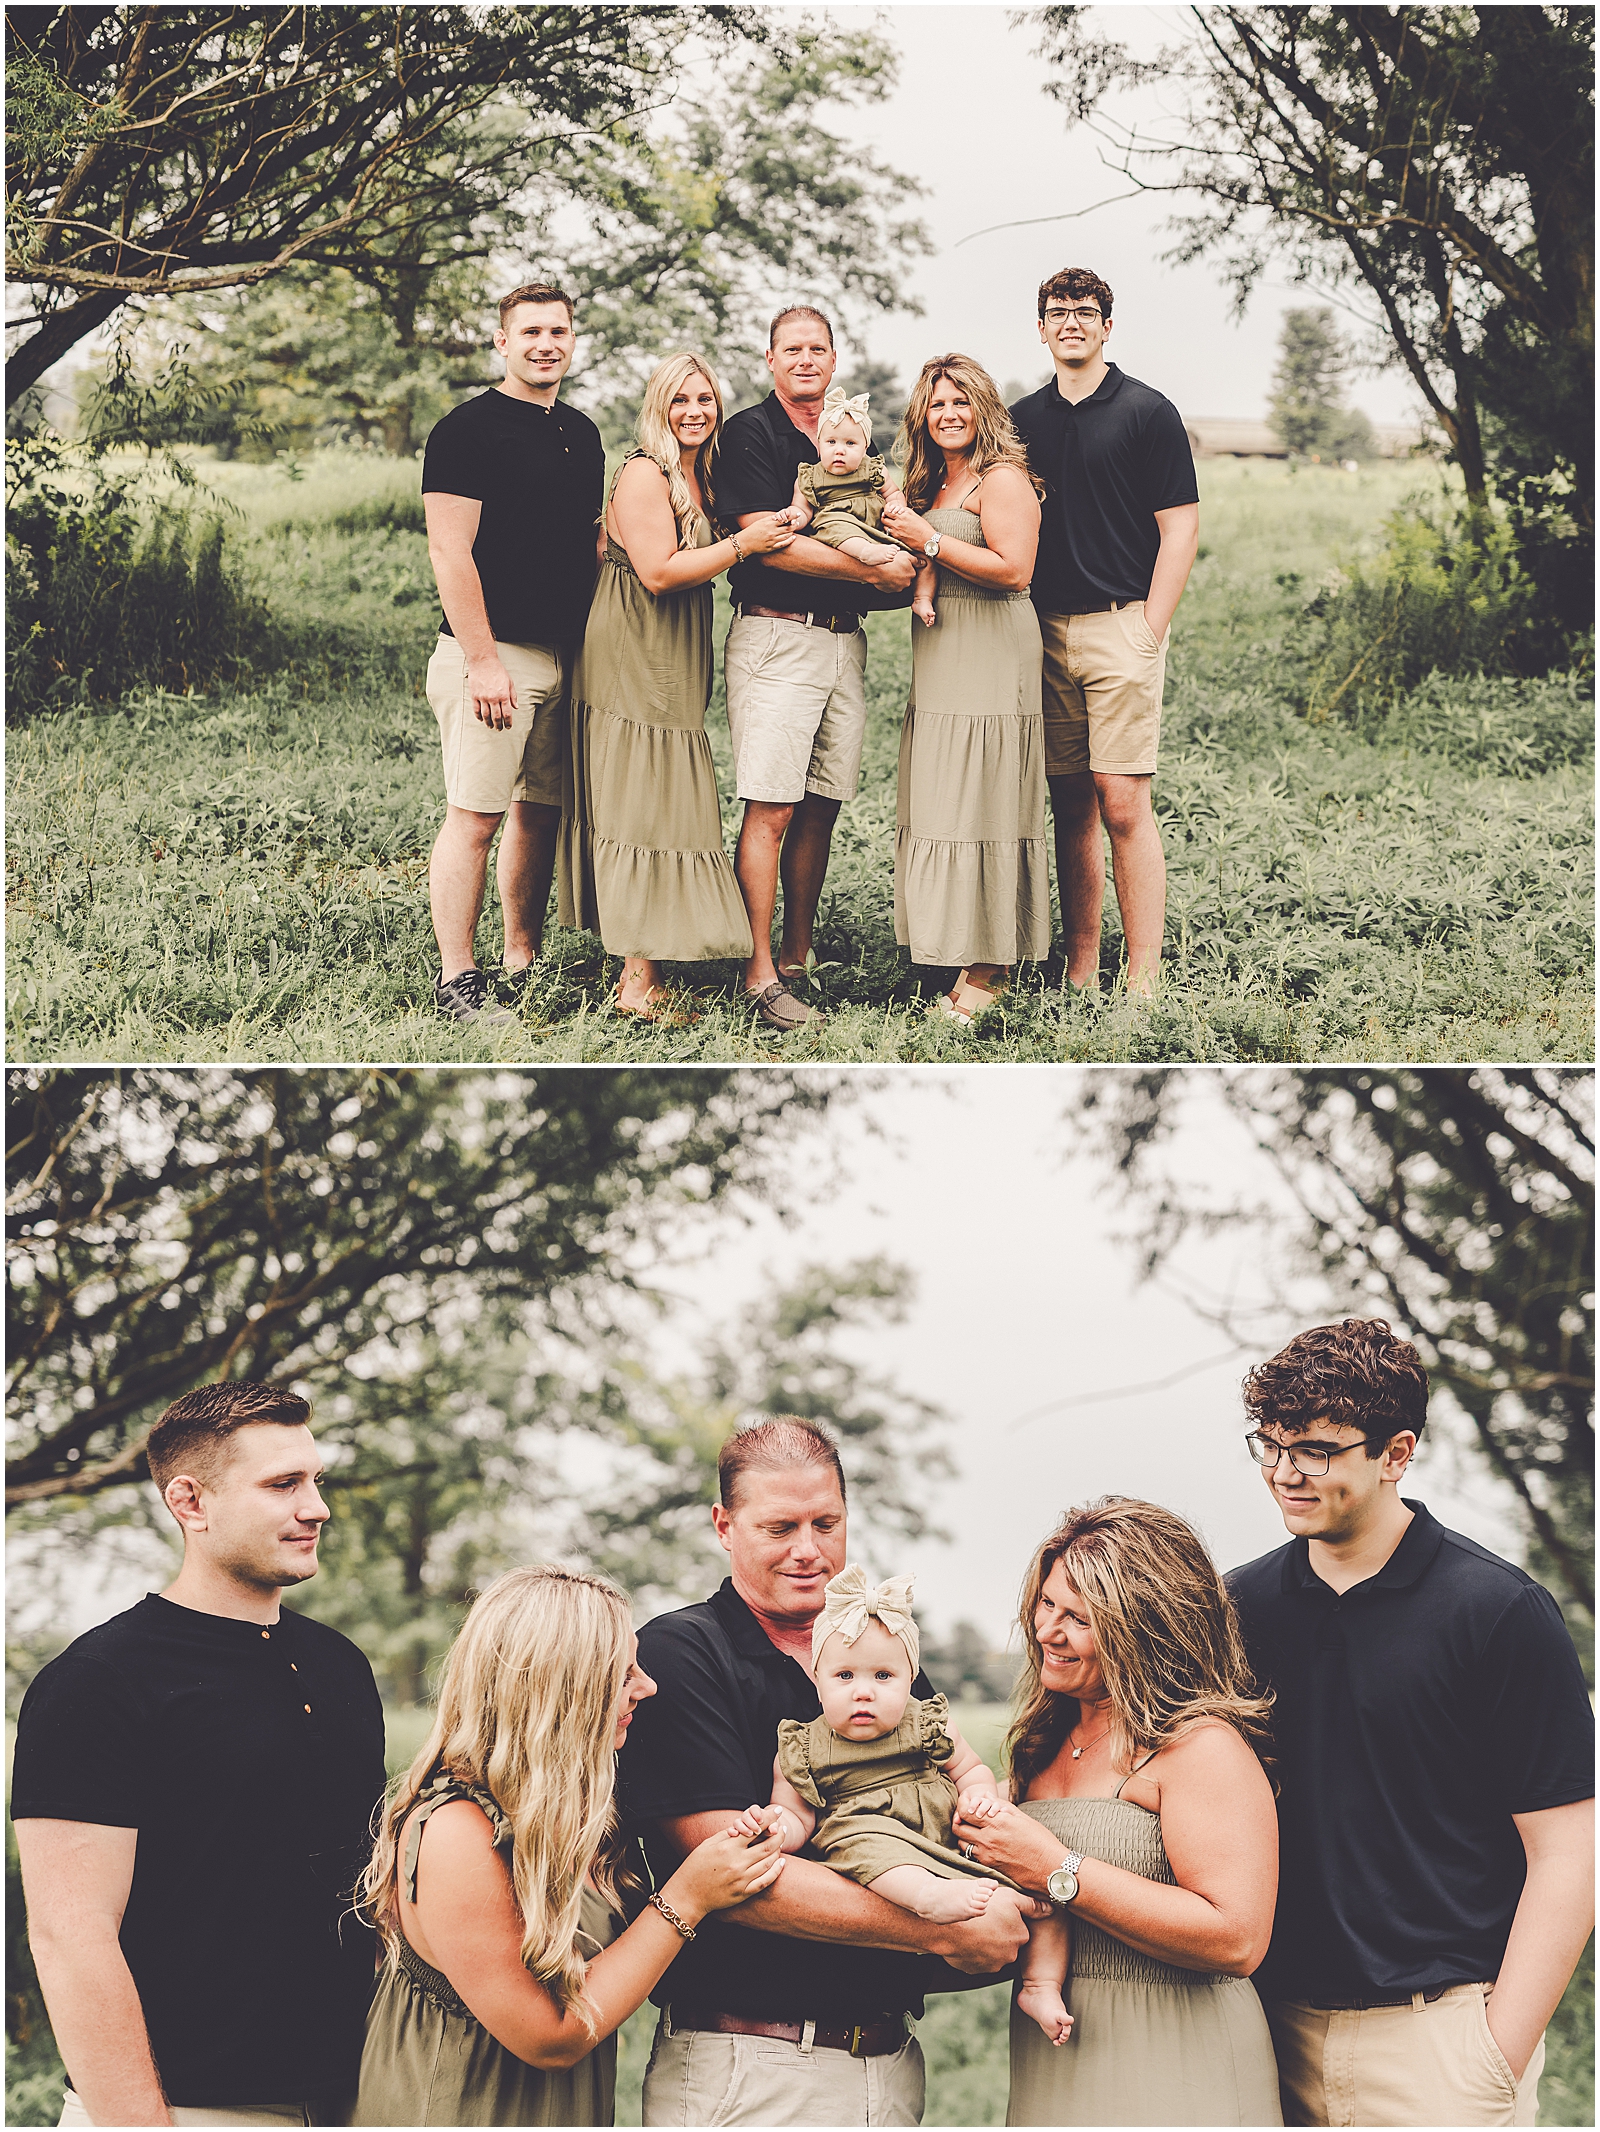 Central Illinois family photos with Bourbonnais & Kankakee County family photographer Kara Evans Photographer.